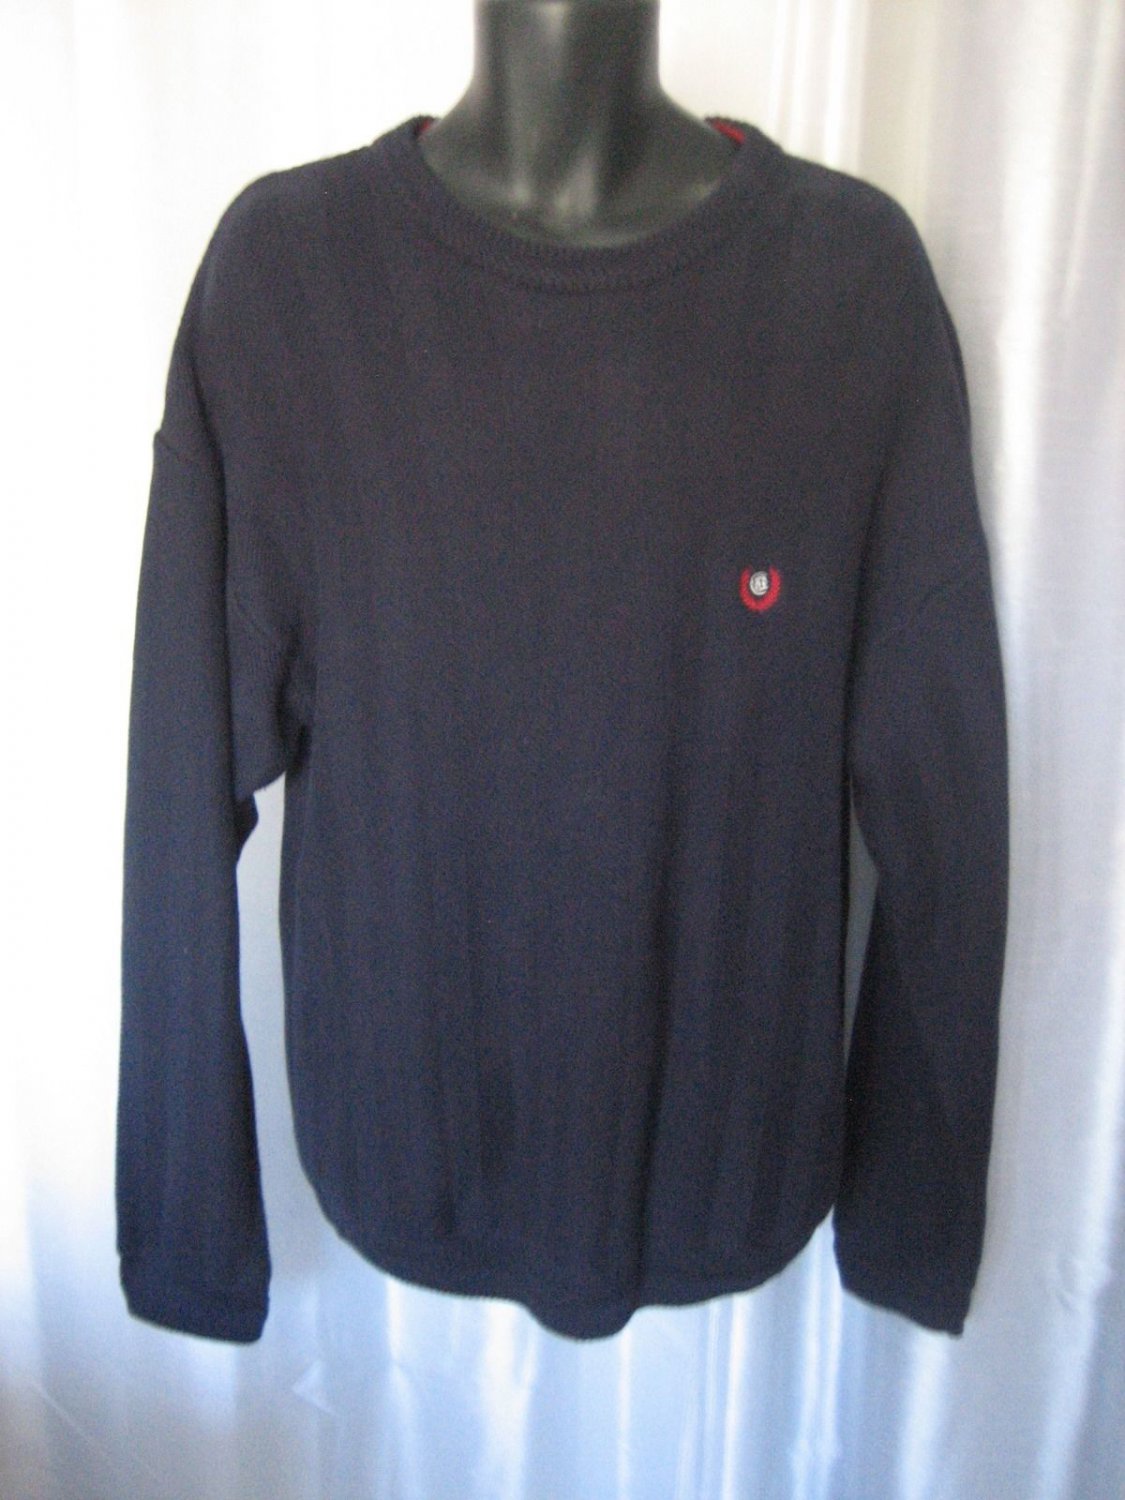 Chaps Ralph Lauren Men's 100% Cotton Navy Pullover Sweater Sz L Pre-Owned